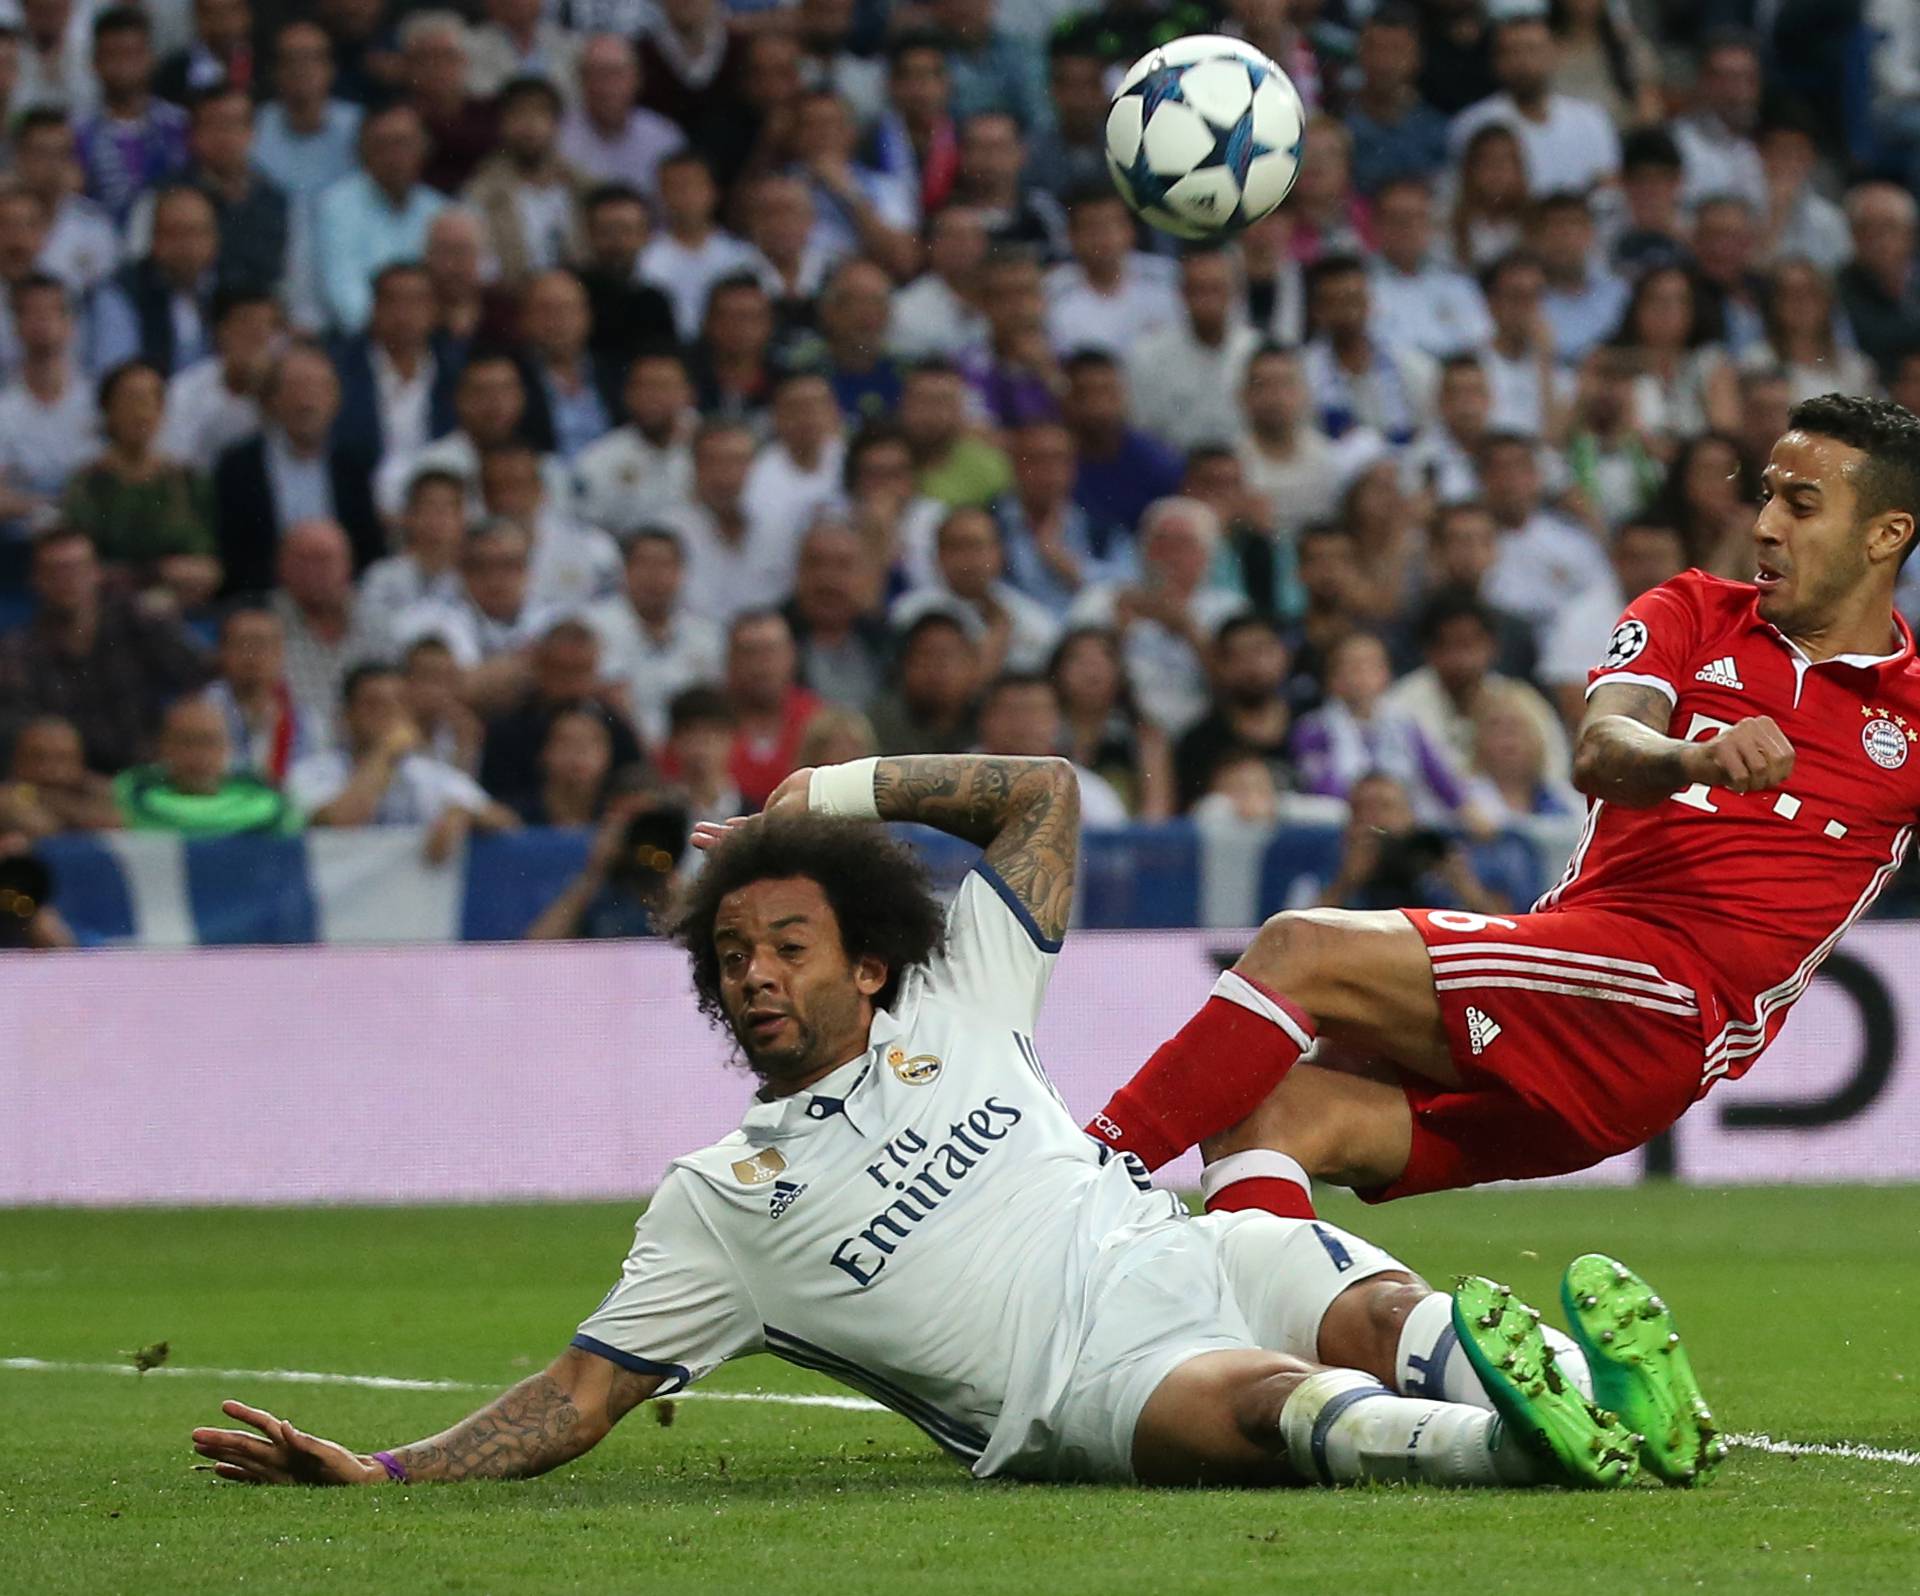 Real Madrid's Marcelo blocks the shot of Bayern Munich's Thiago Alcantara